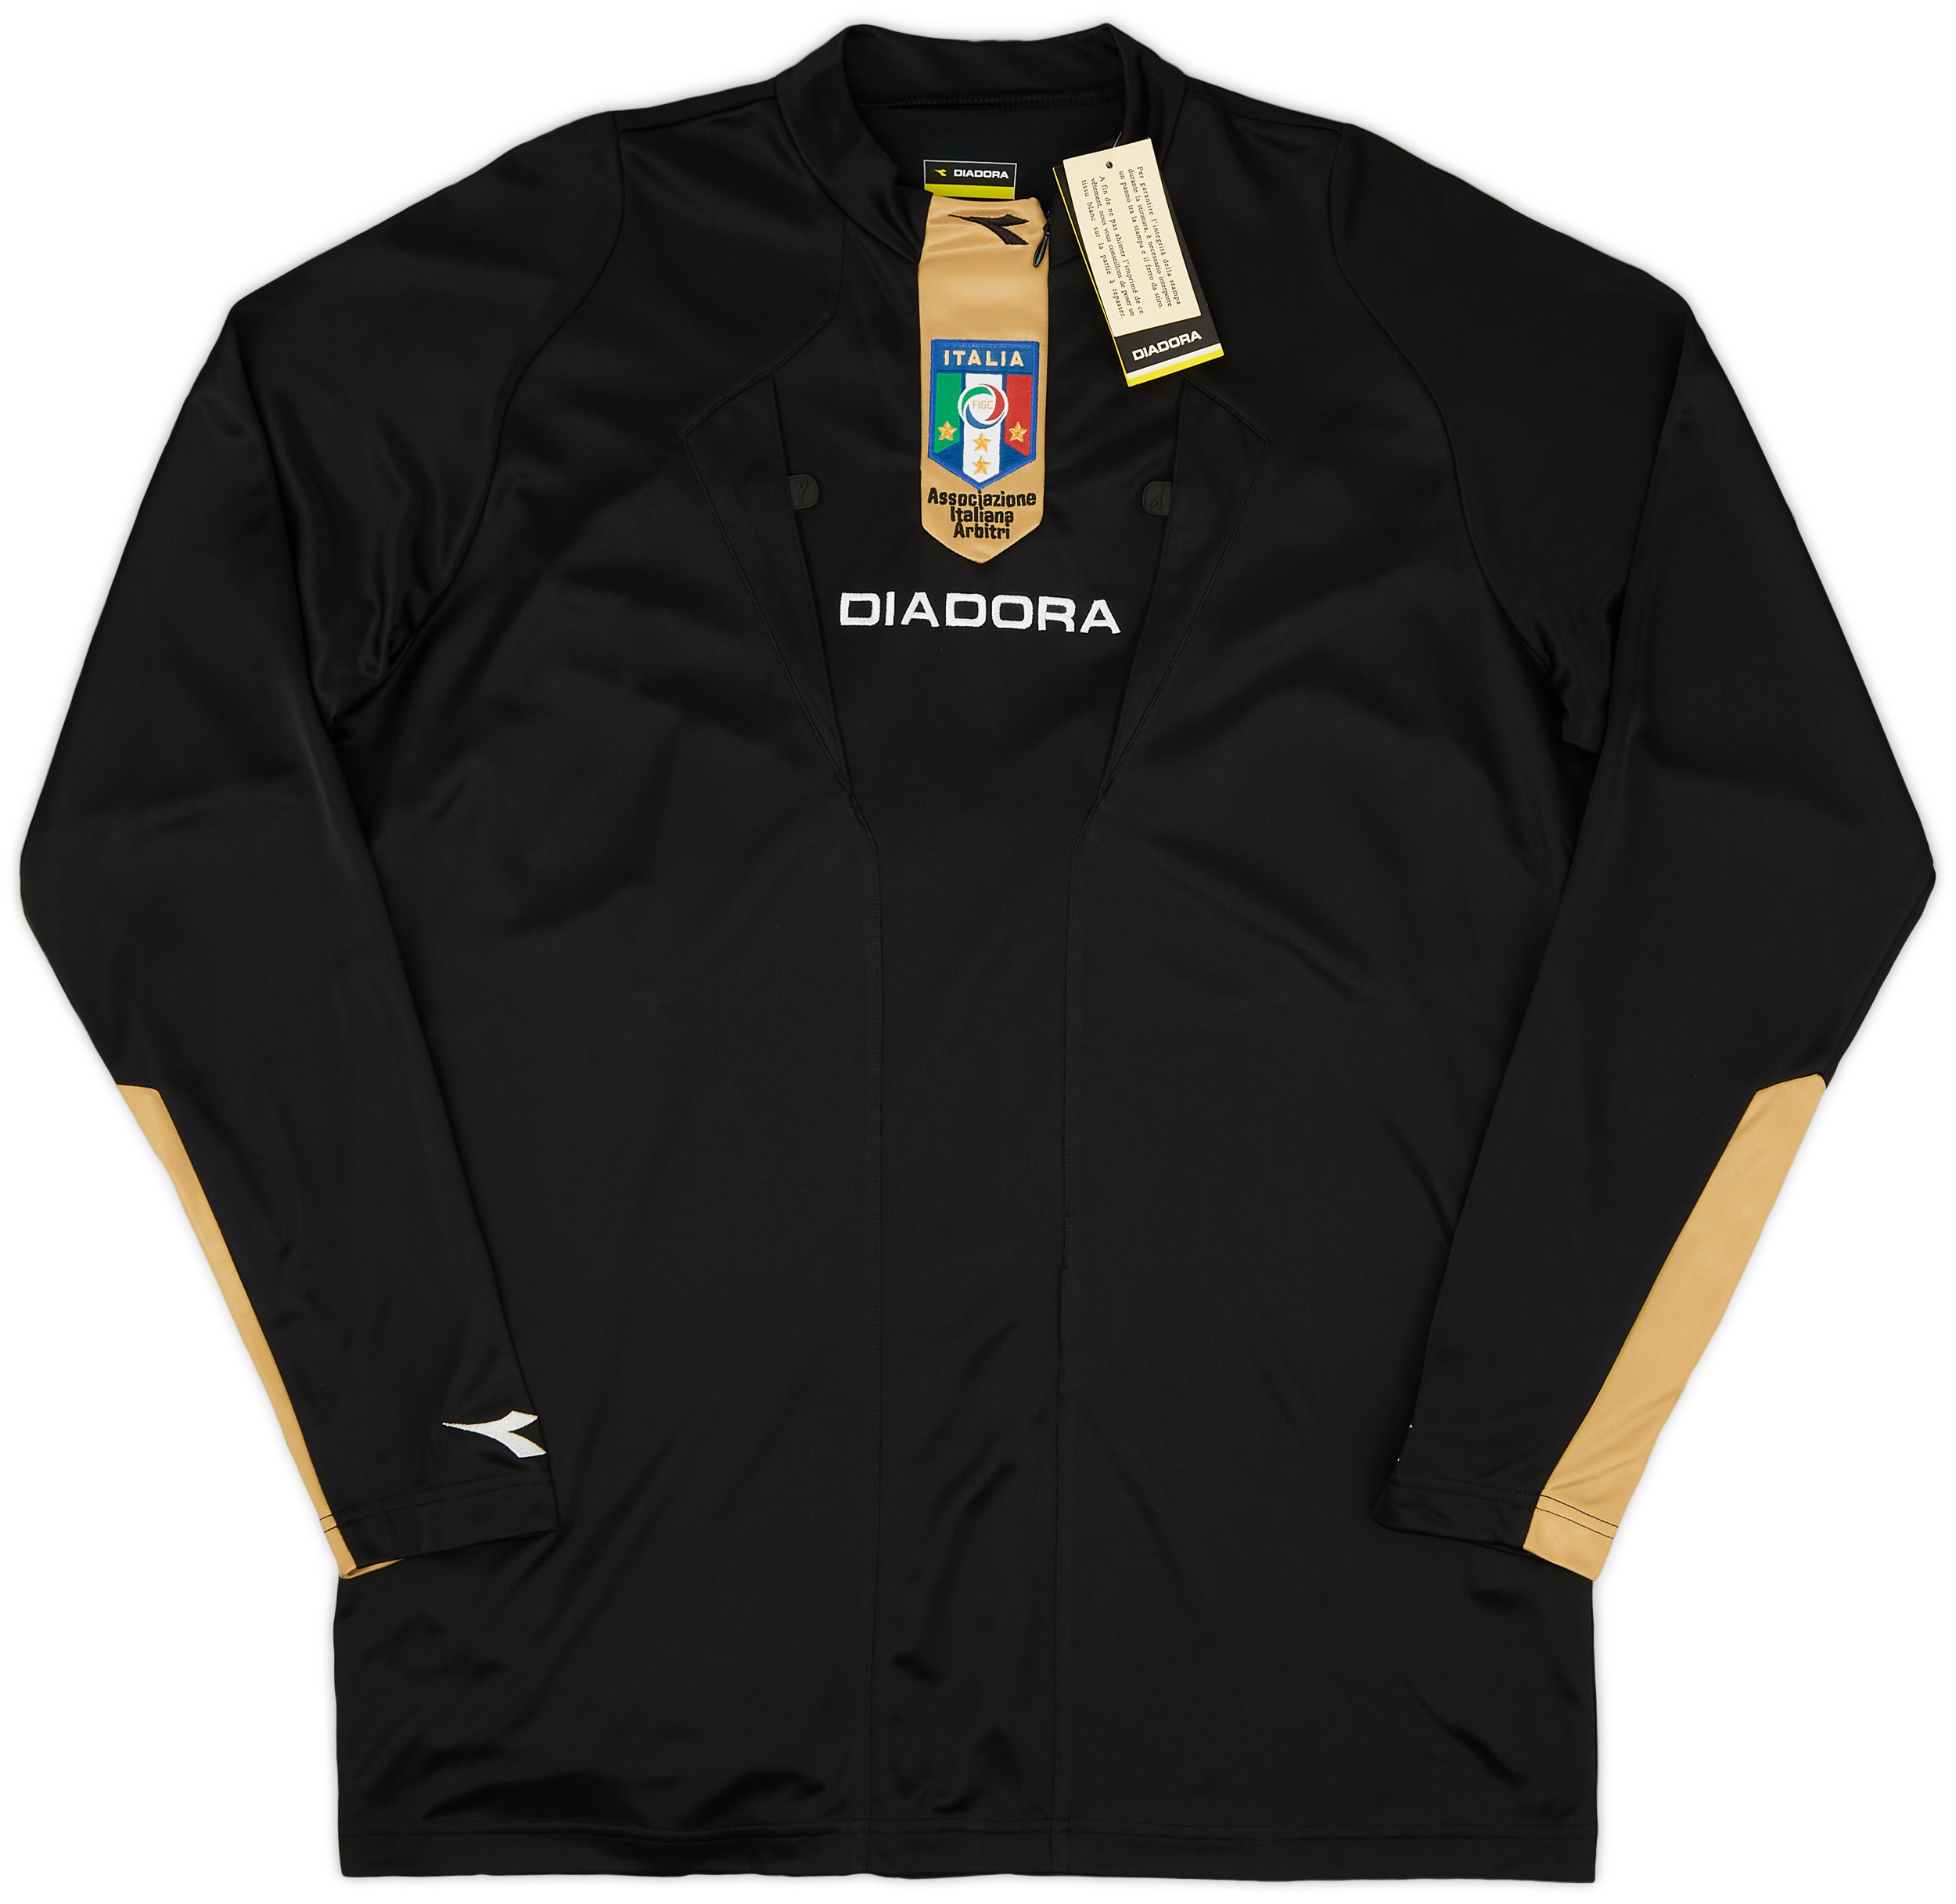 2007-08 Italy Diadora Referee Shirt - ()